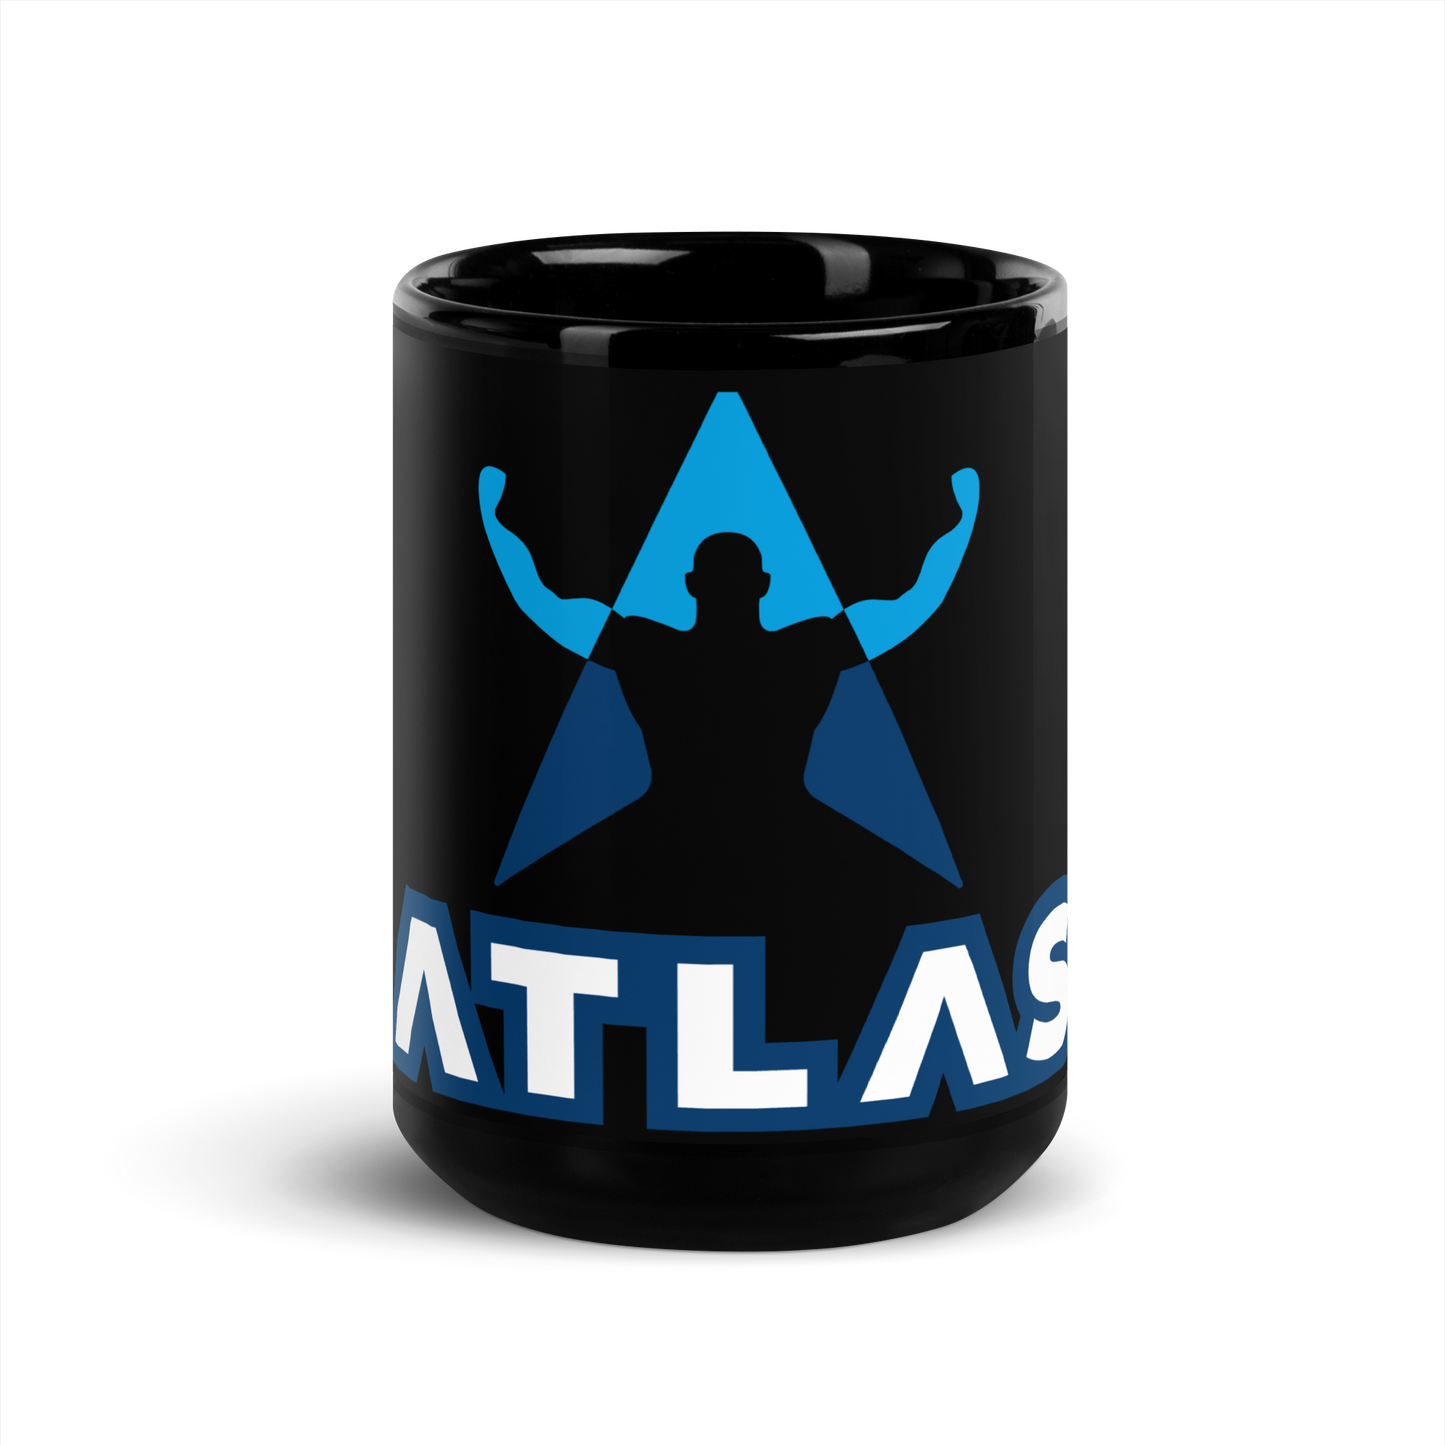 Atlas - Tazza nera lucida